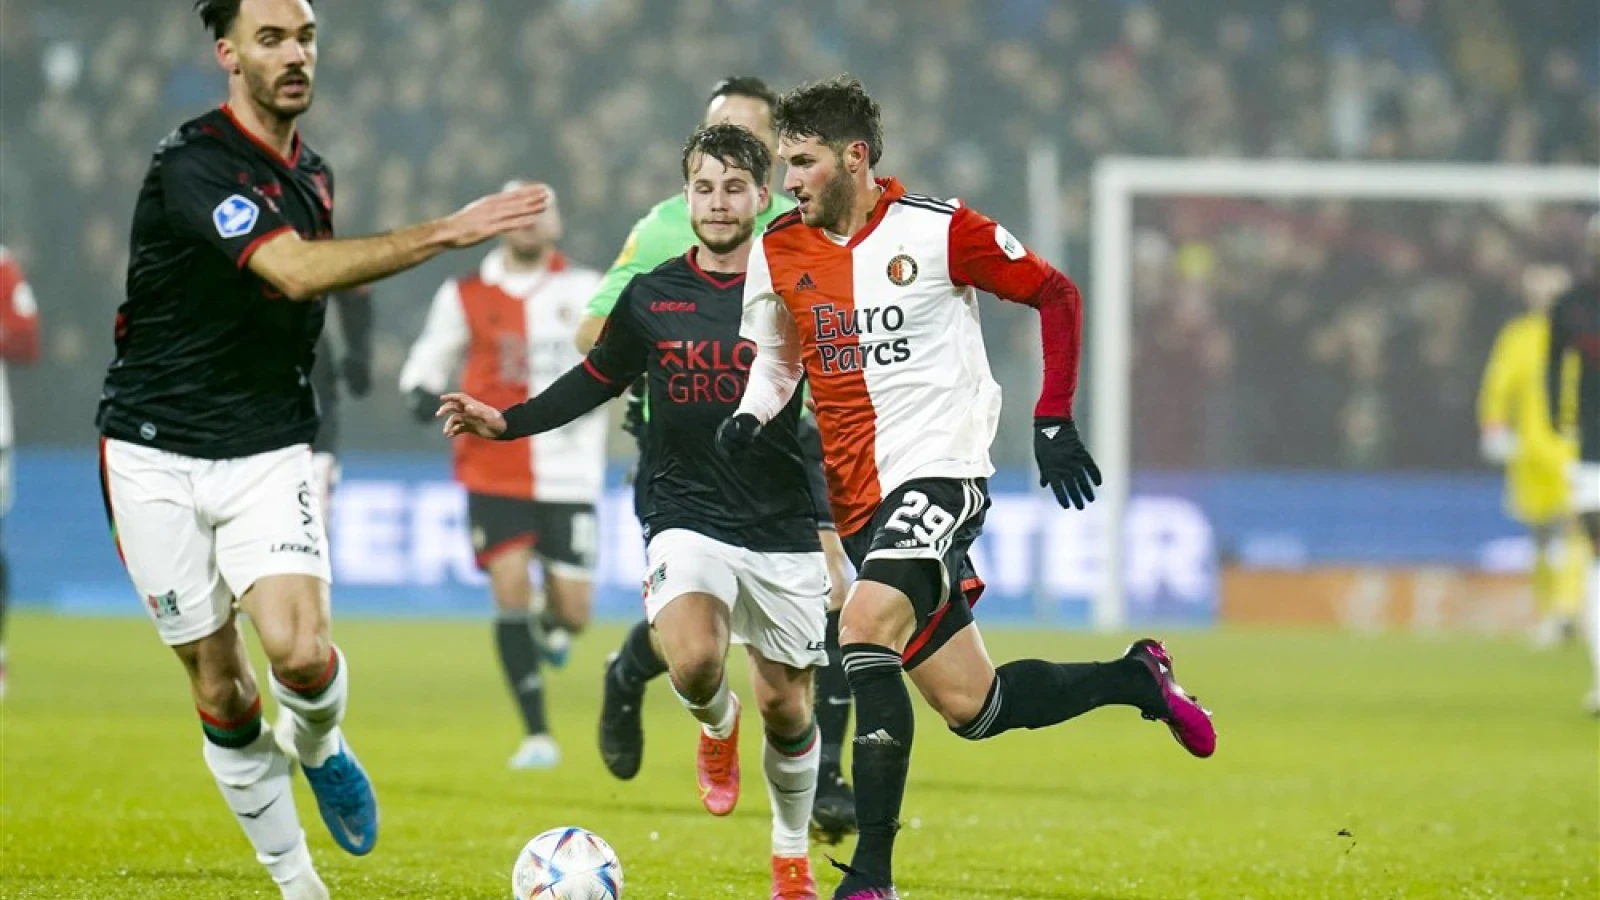 LIVE | Feyenoord - NEC 2-0 | Einde wedstrijd